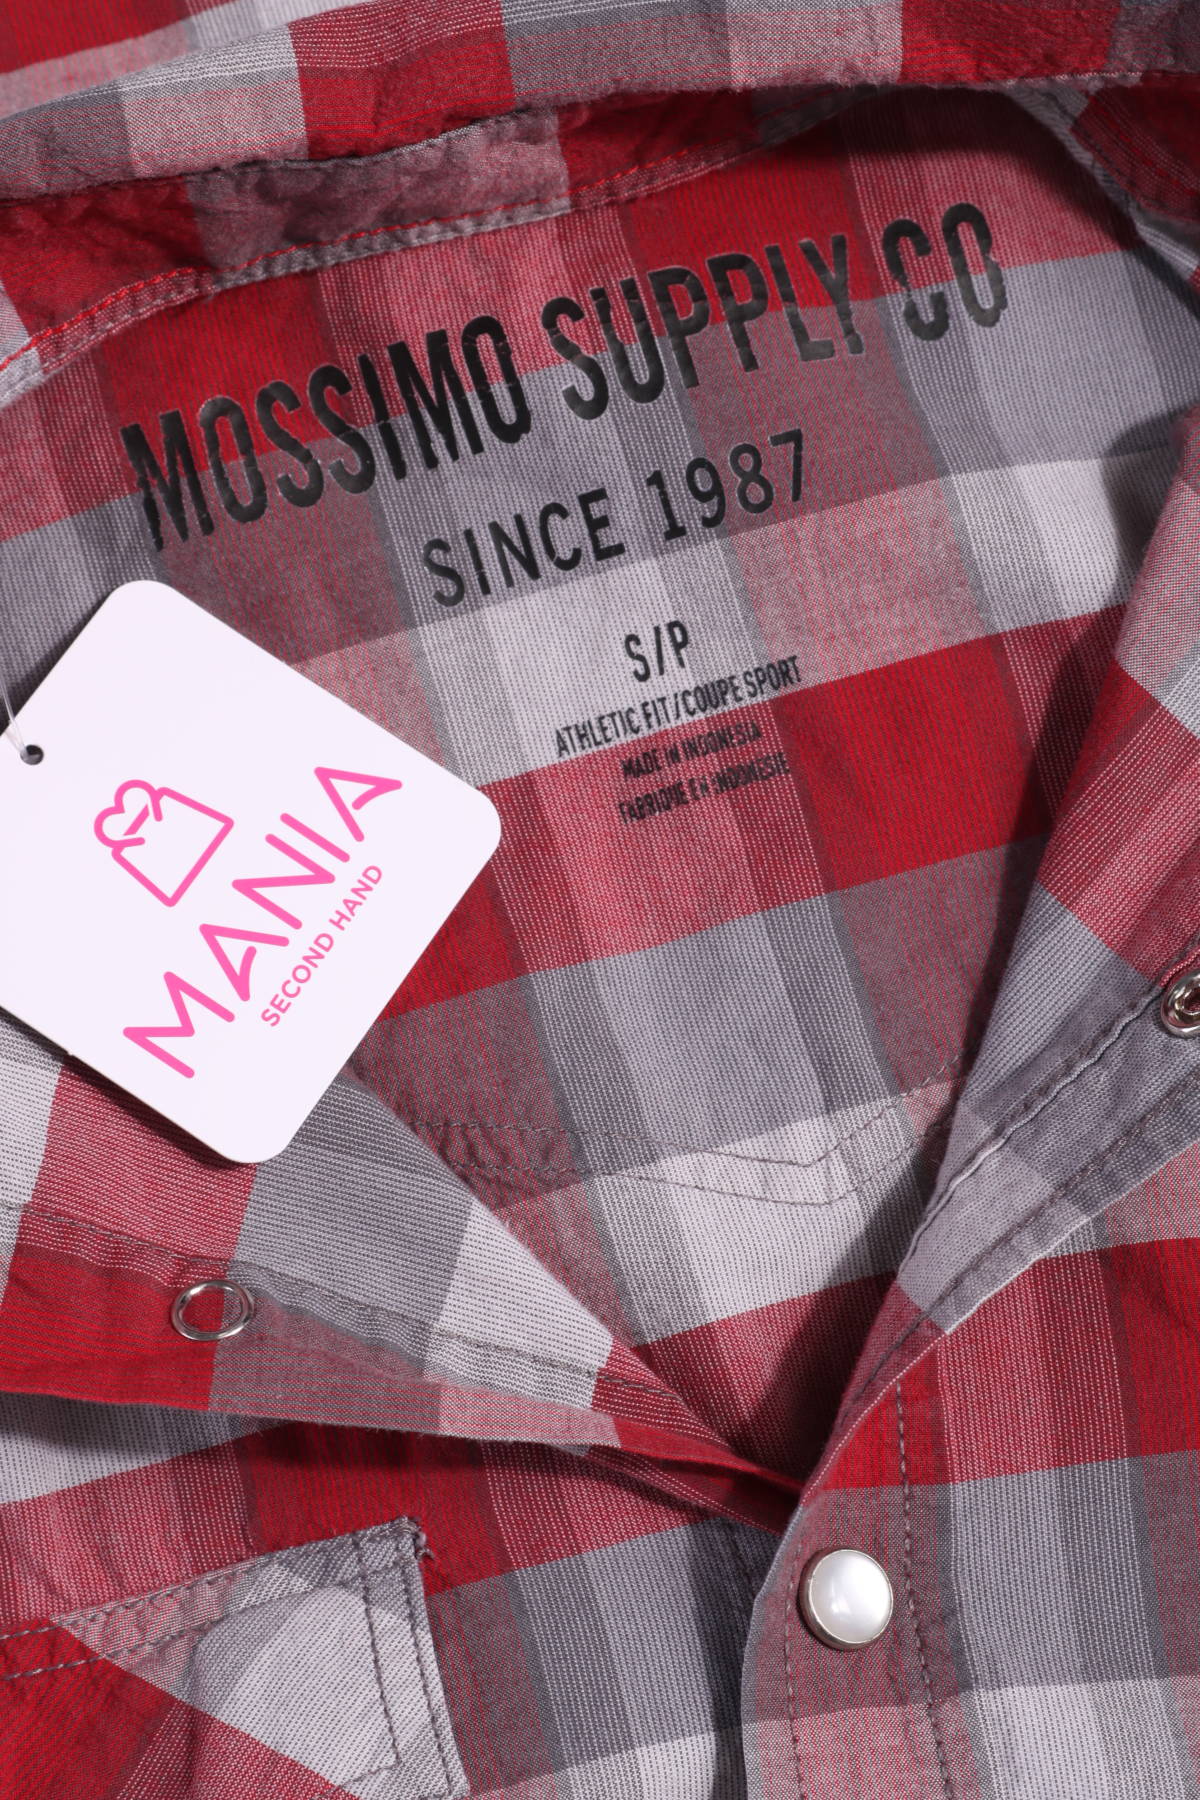 Риза MOSSIMO SUPPLY CO.3